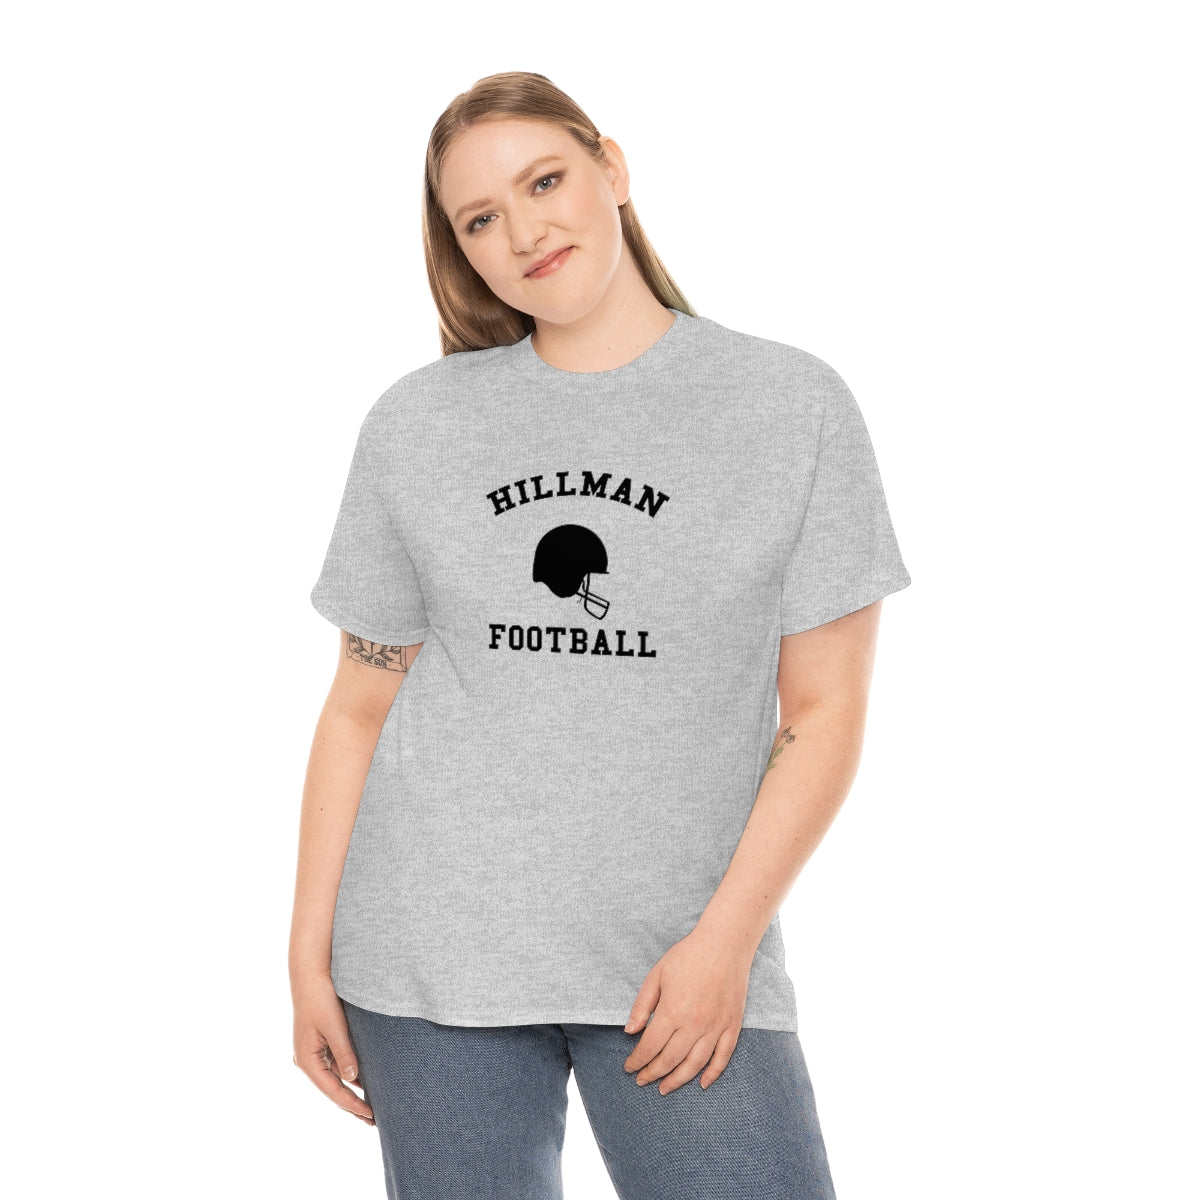 Hillman Football: Black Lettering Unisex Short Sleeve Tee